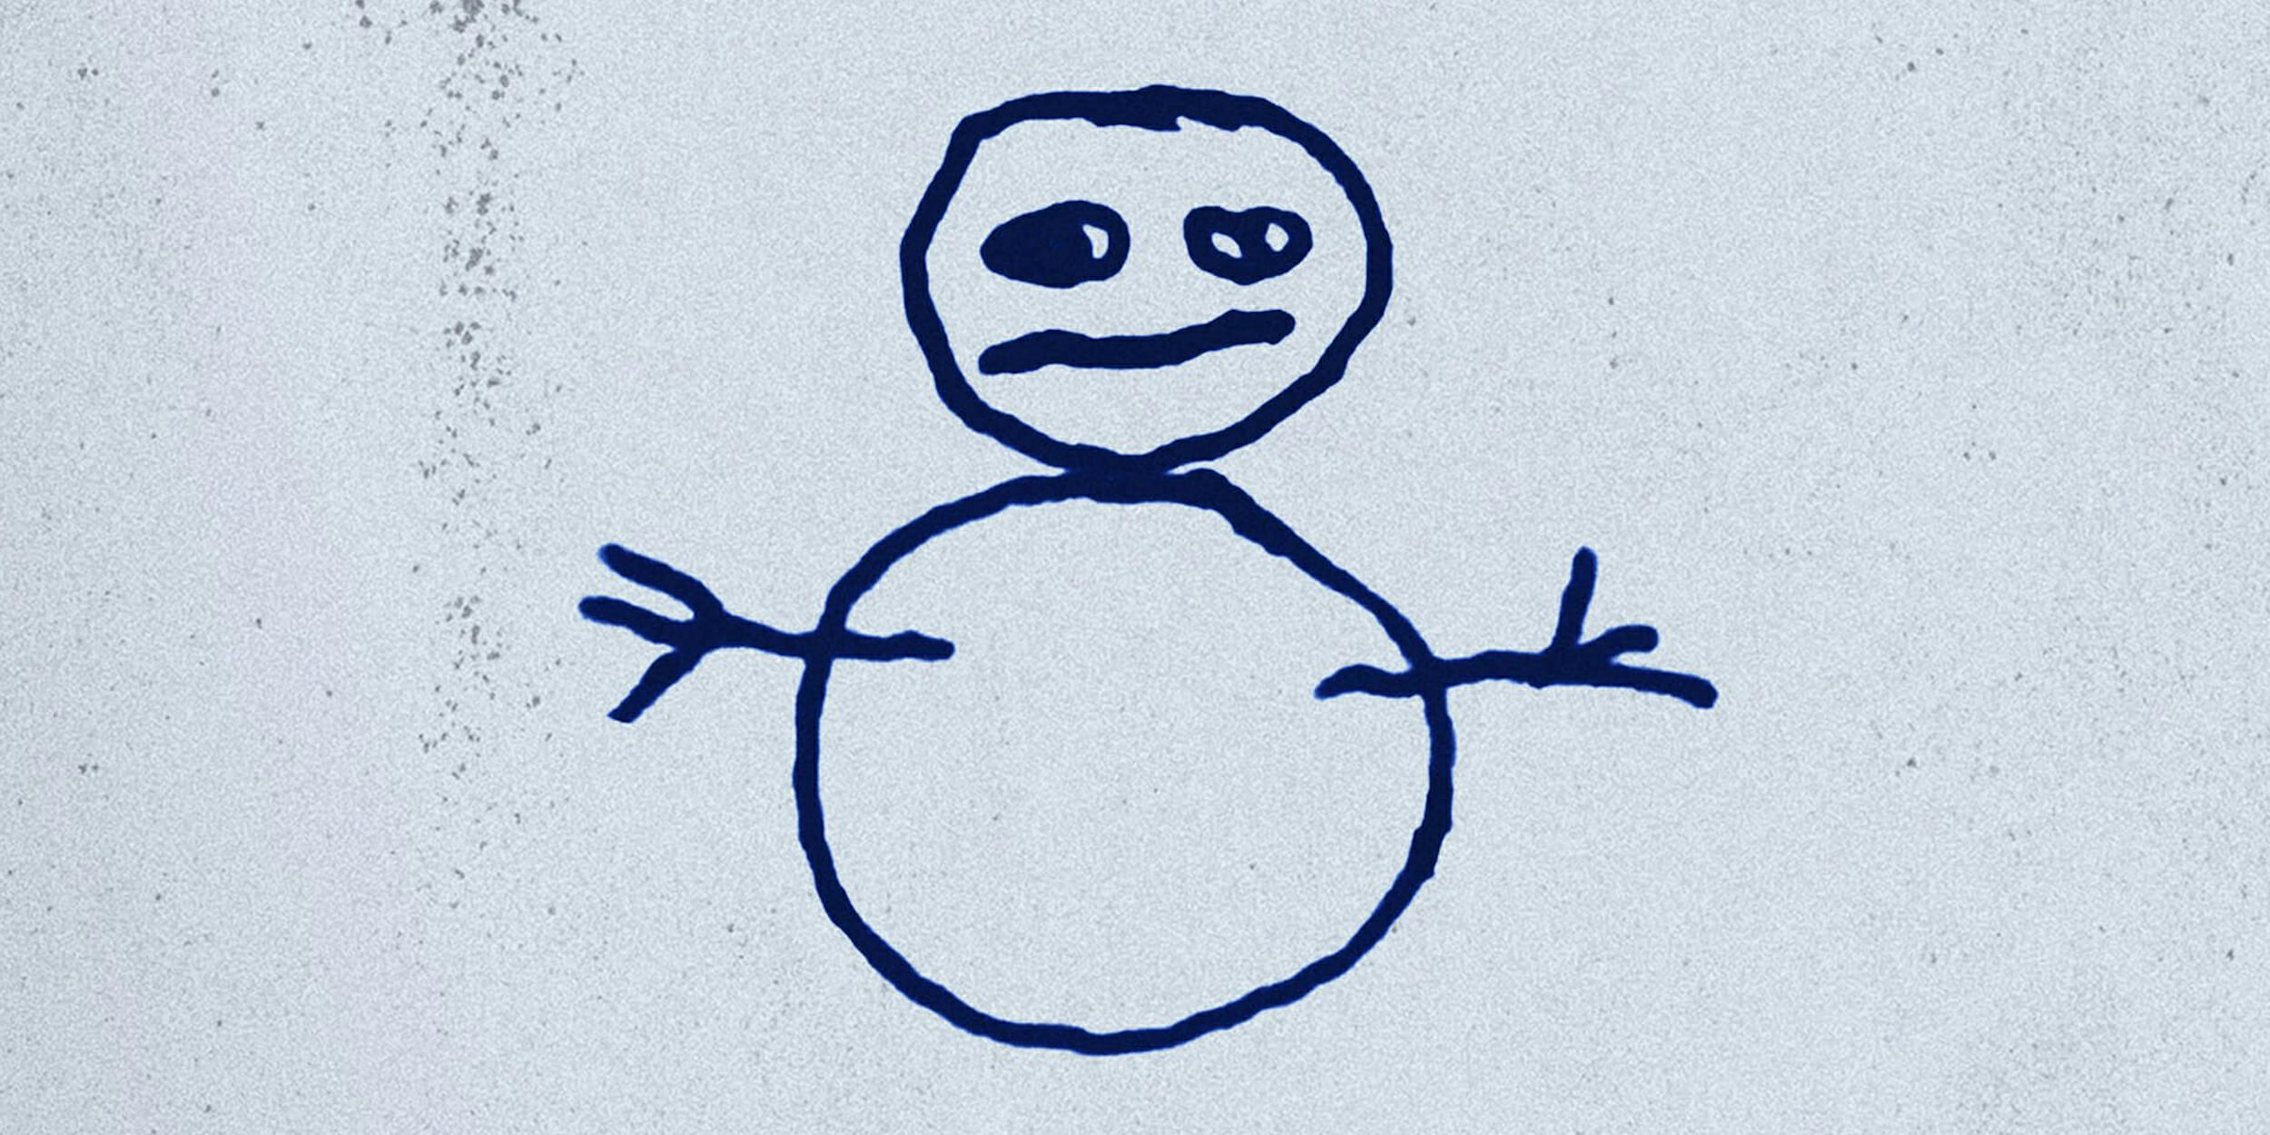 crude drawing of a snowman snowman memes